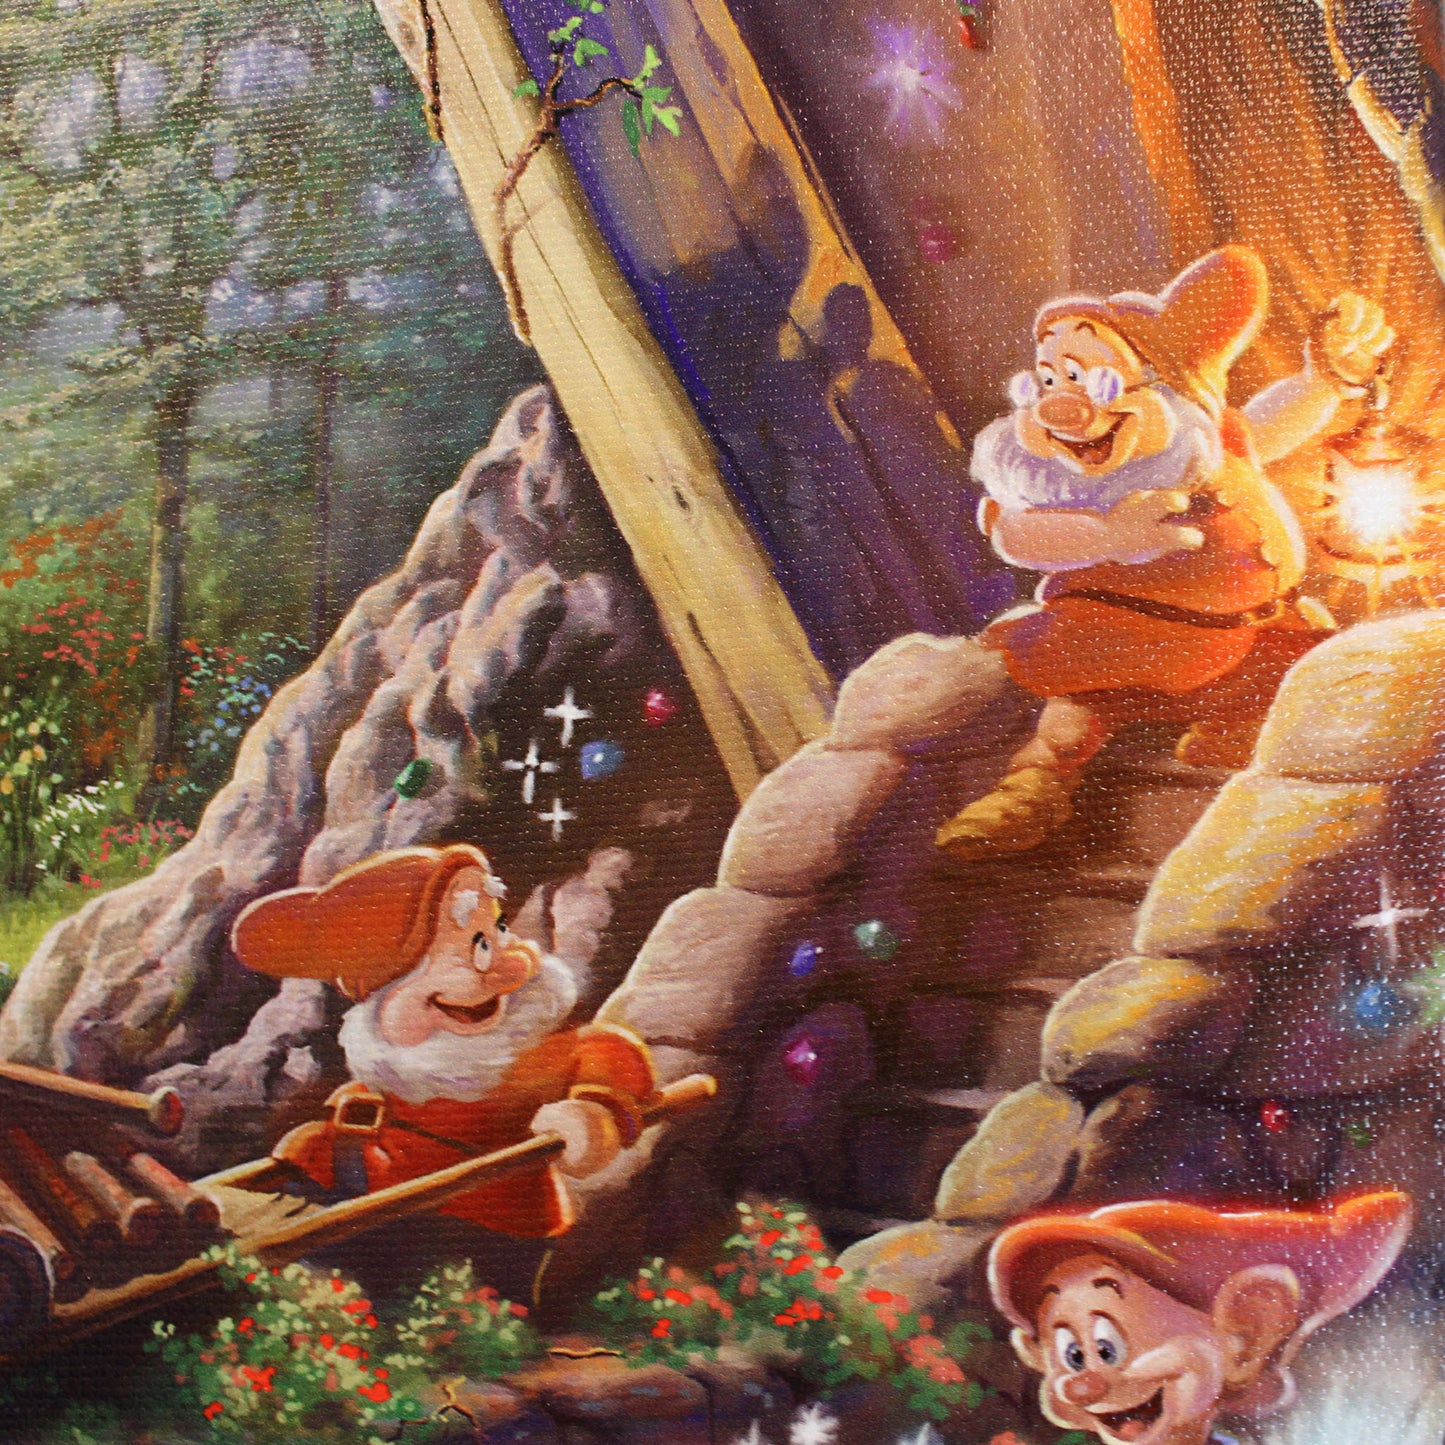 Snow White and the Seven Dwarfs (Disney) Wrapped Canvas Art Print